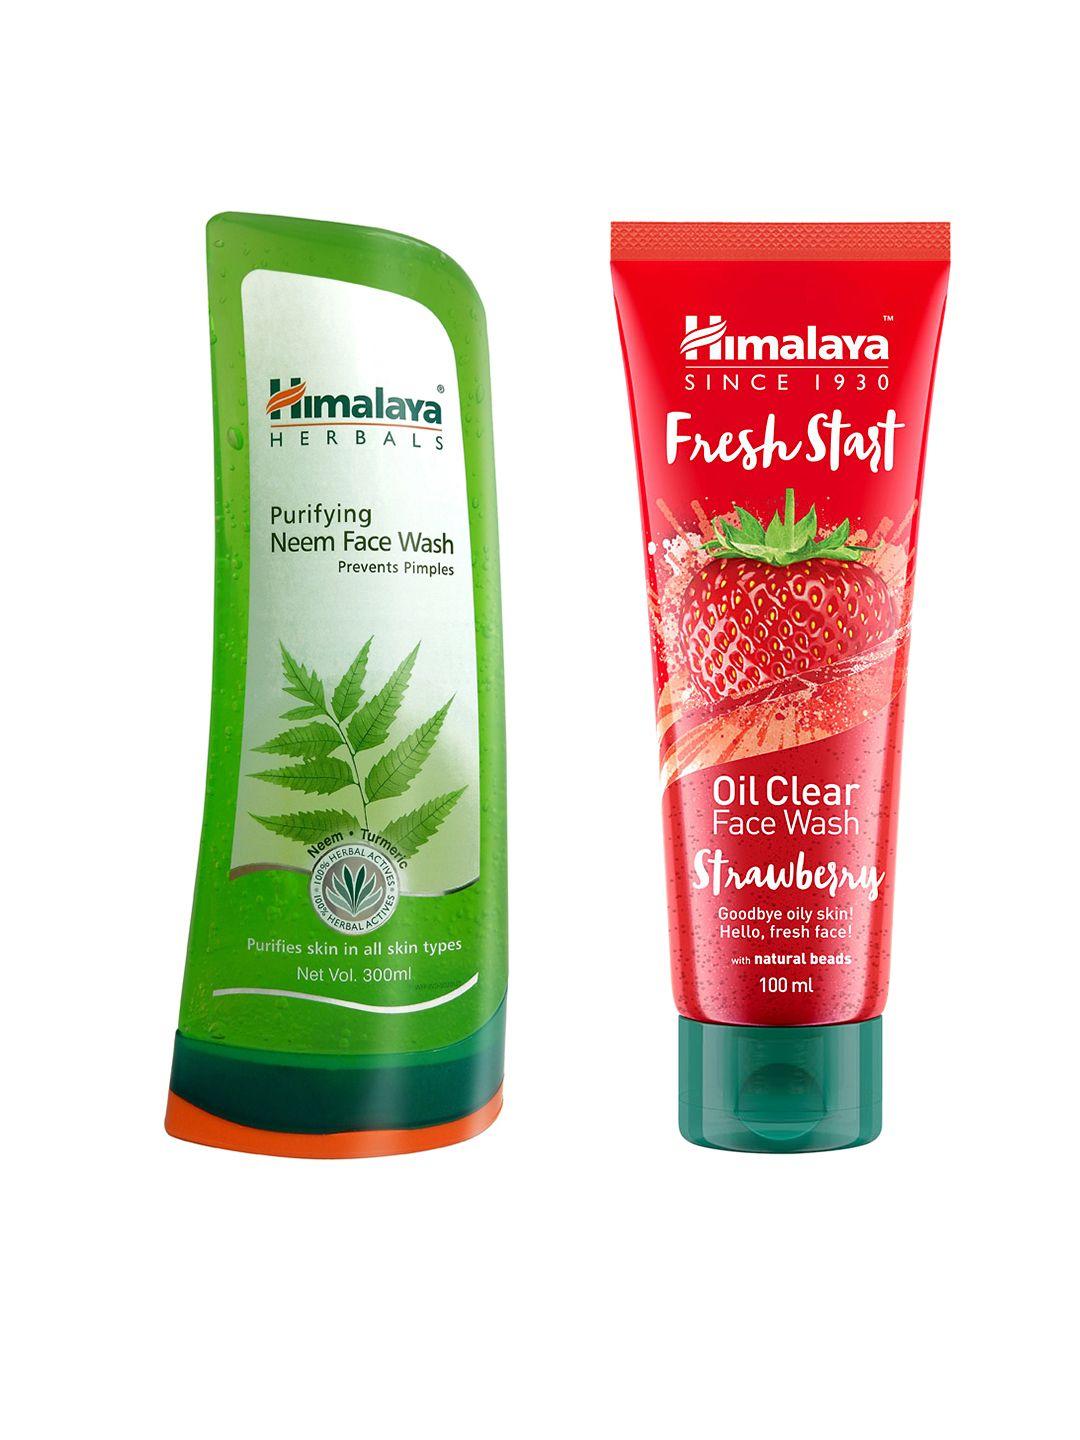 himalaya set of 2 facewash - purifying neem & fresh start oil clear strawberry